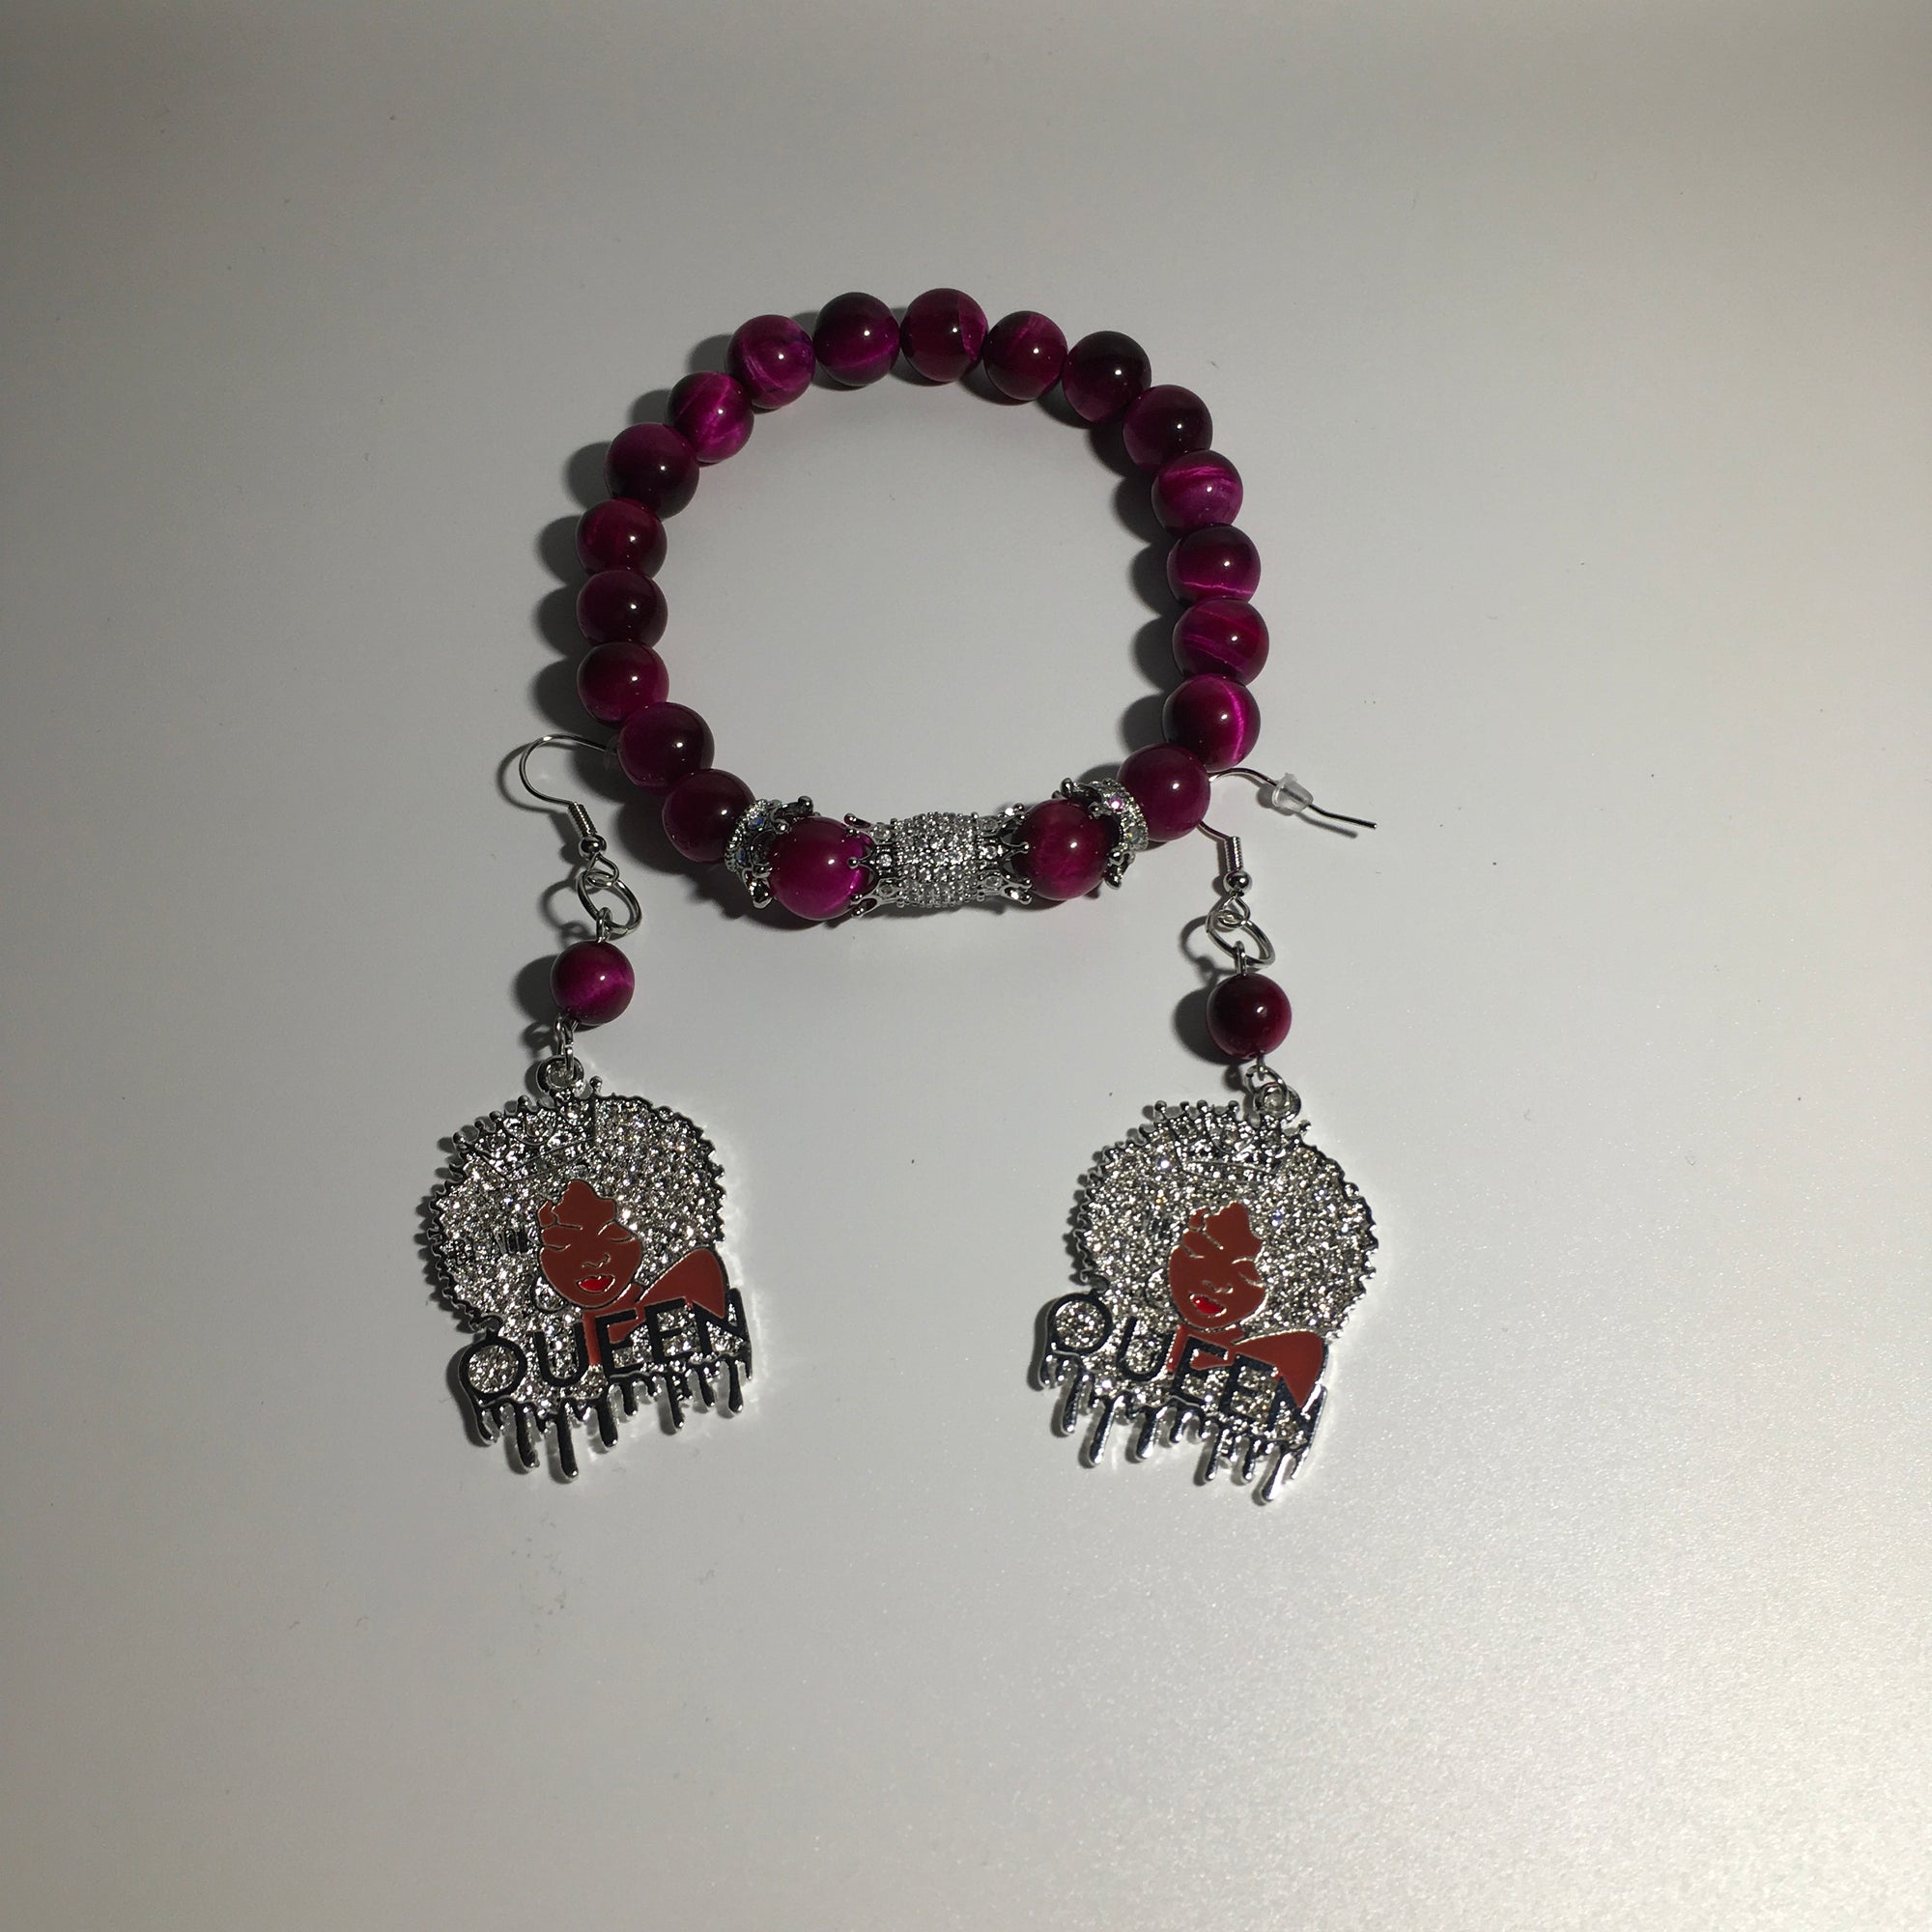 Sterling Queen Charm Bracelet & Earring Set